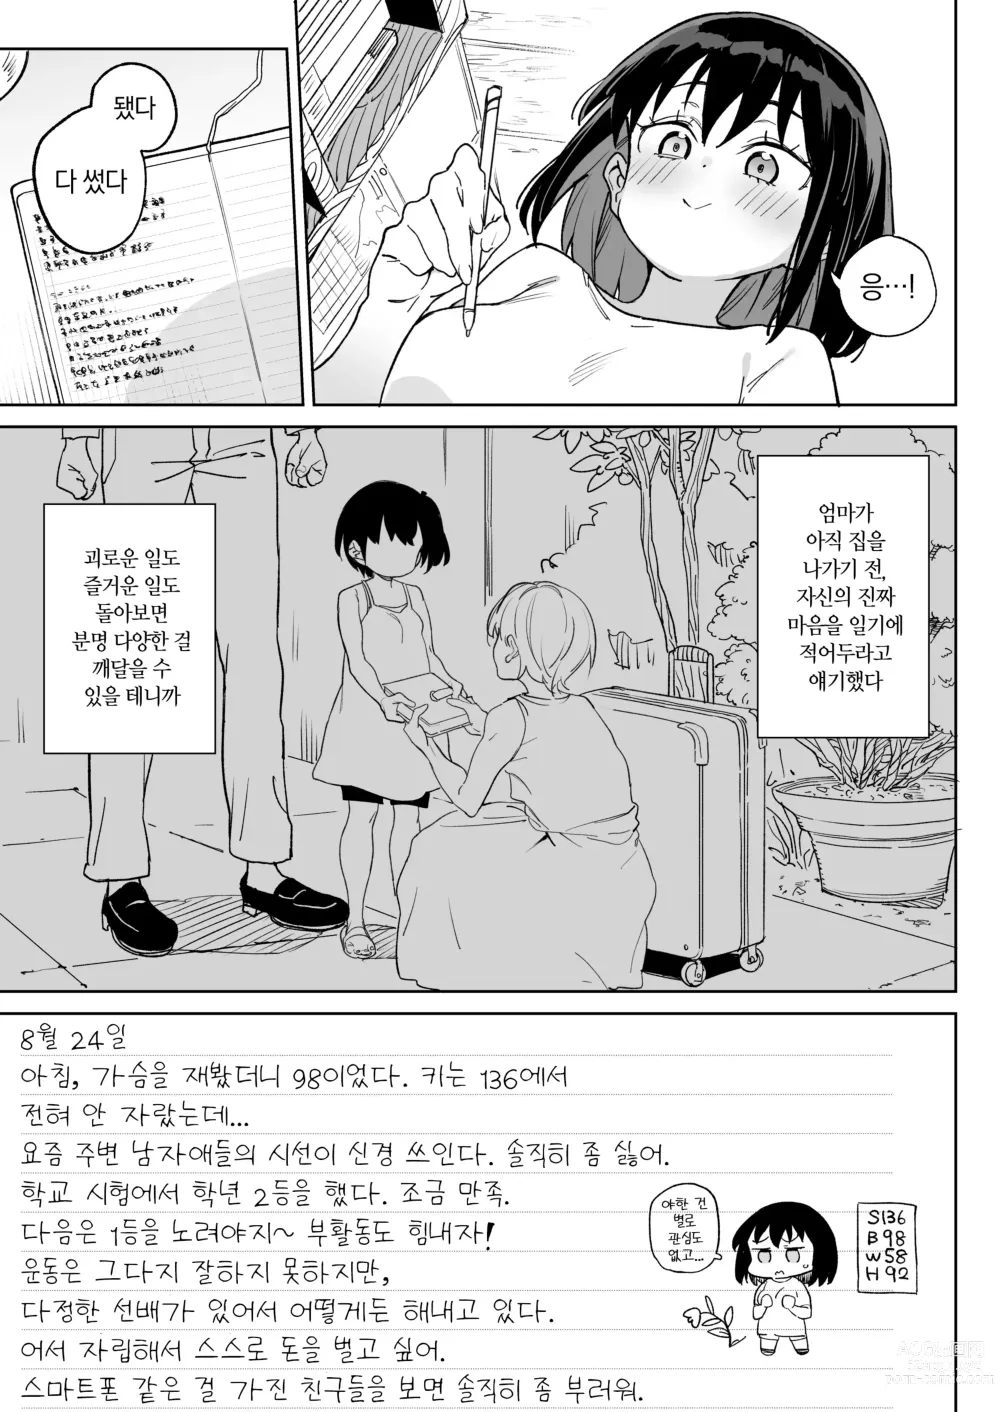 Page 2 of doujinshi 11월 28일 새 아빠의 소유물이 되었습니다.